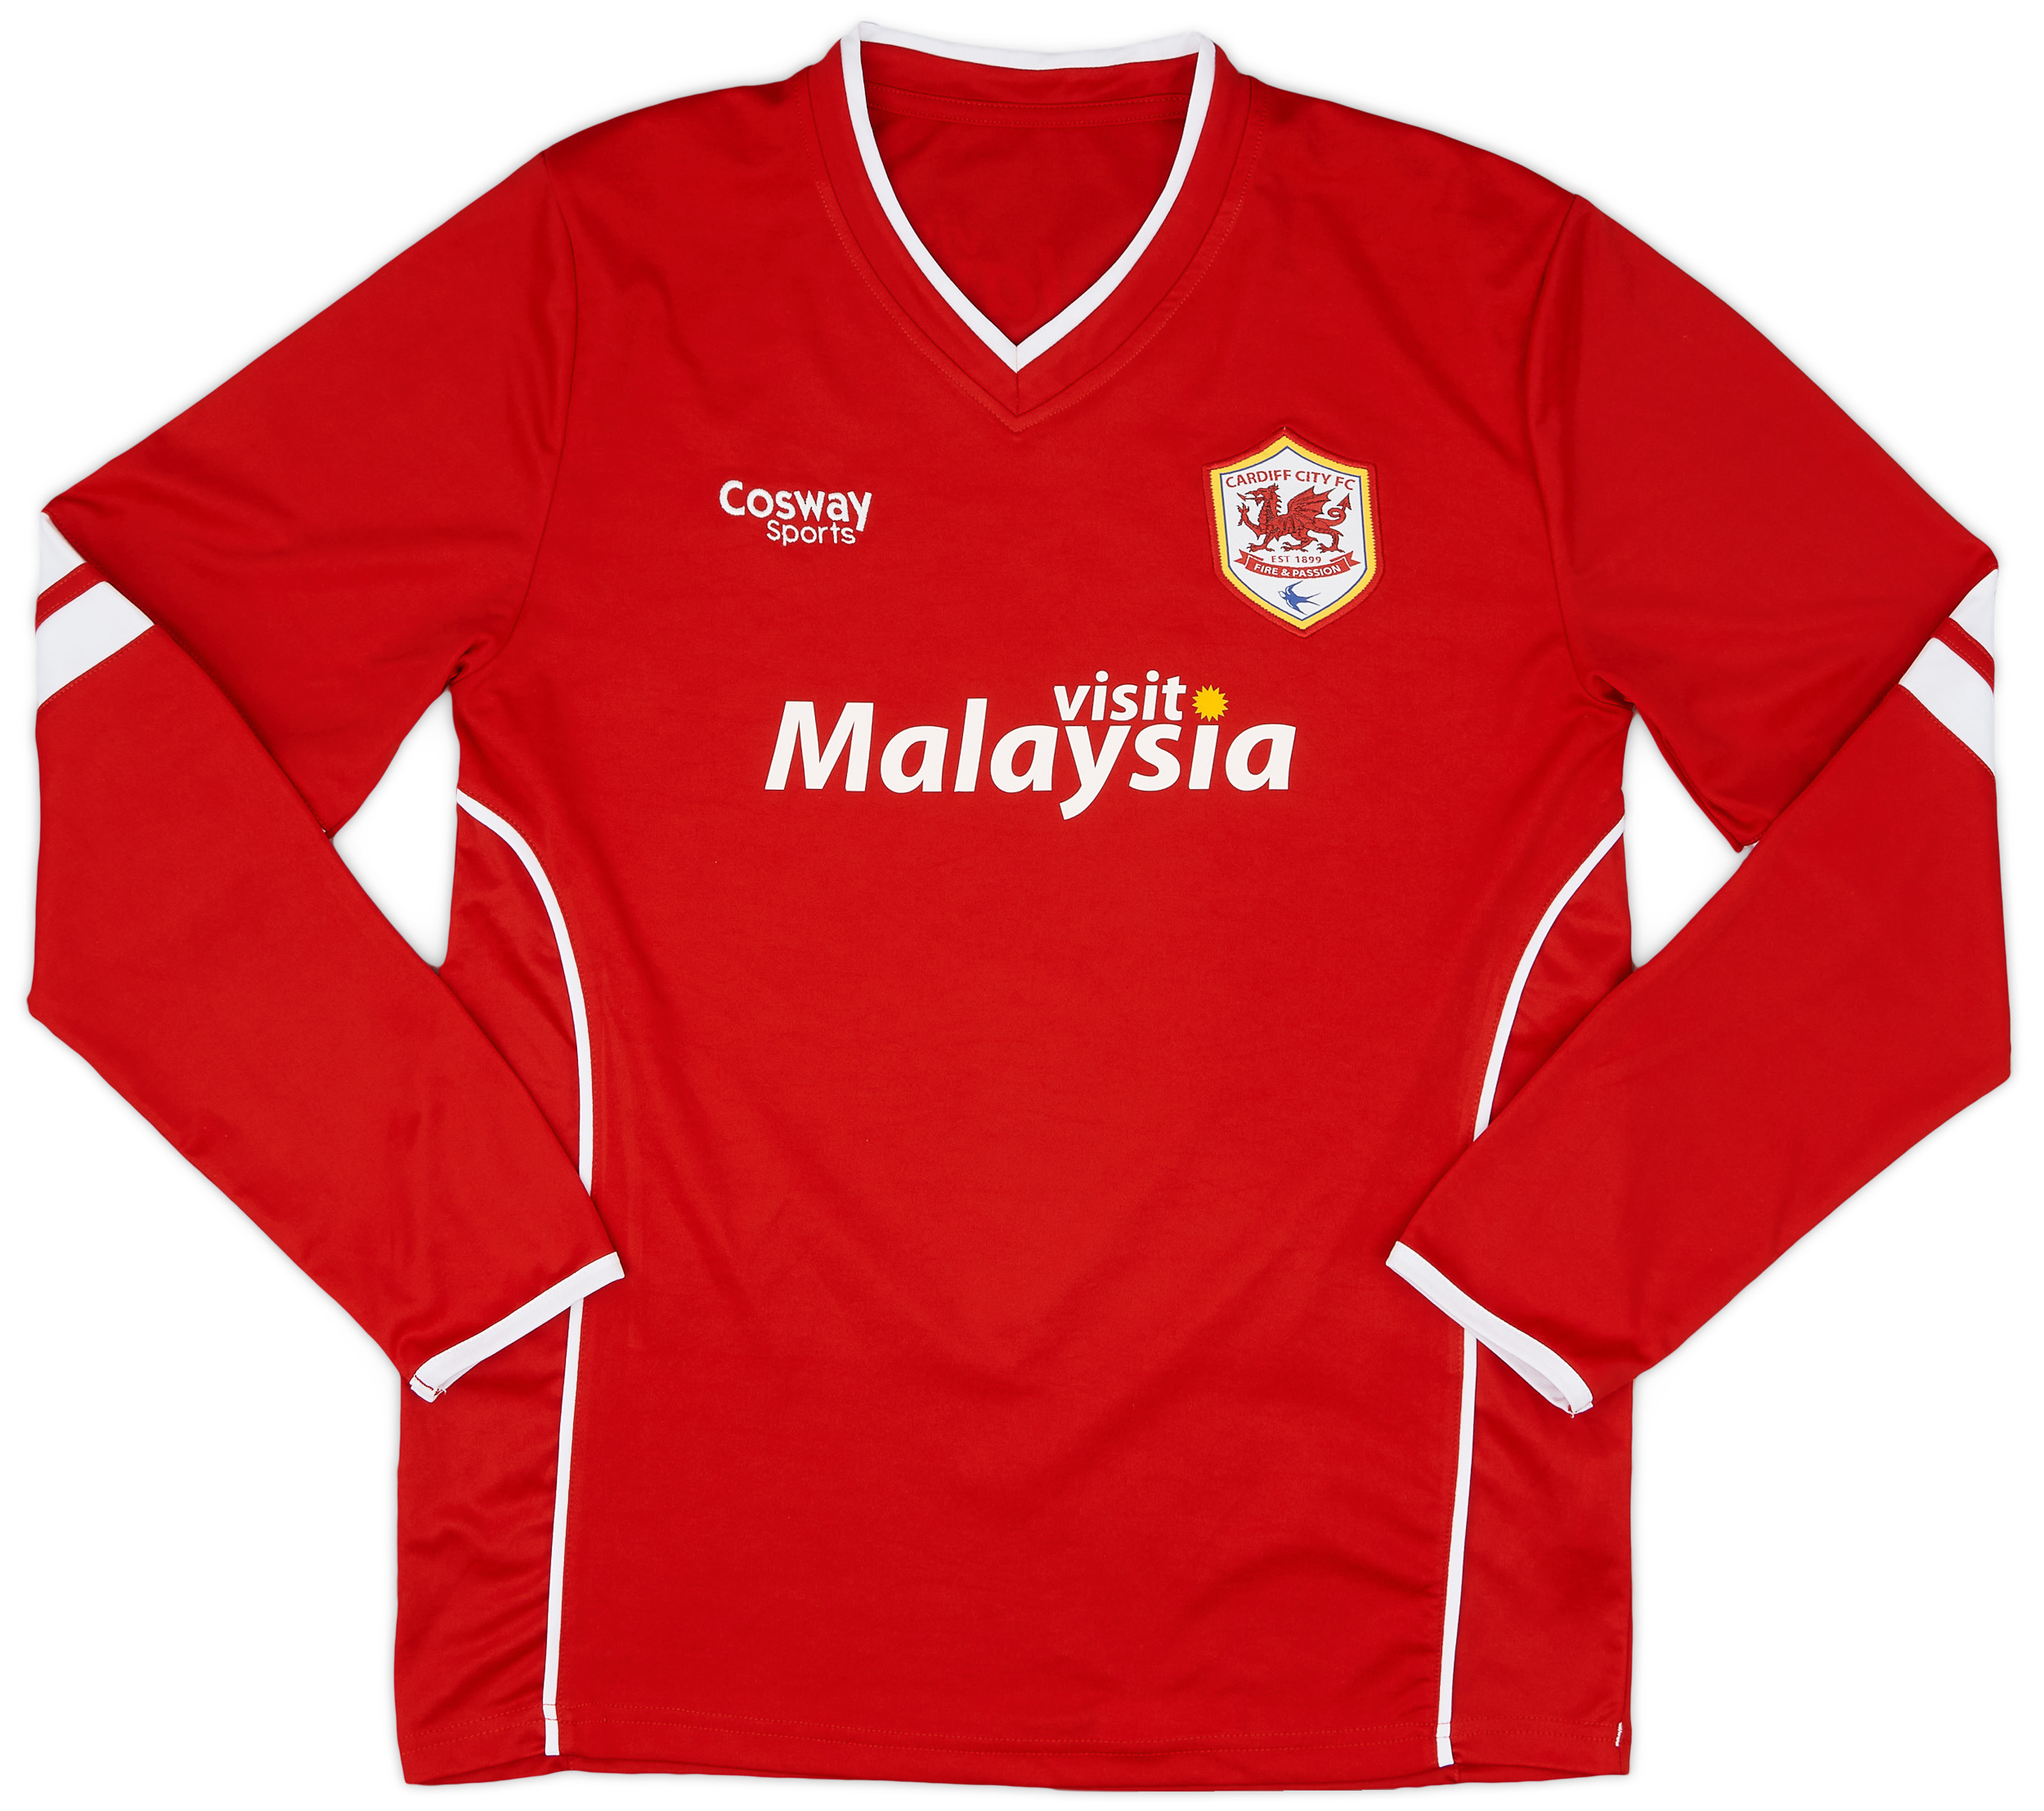 2014-15 Cardiff City Home/Away Shirt - 9/10 - ()